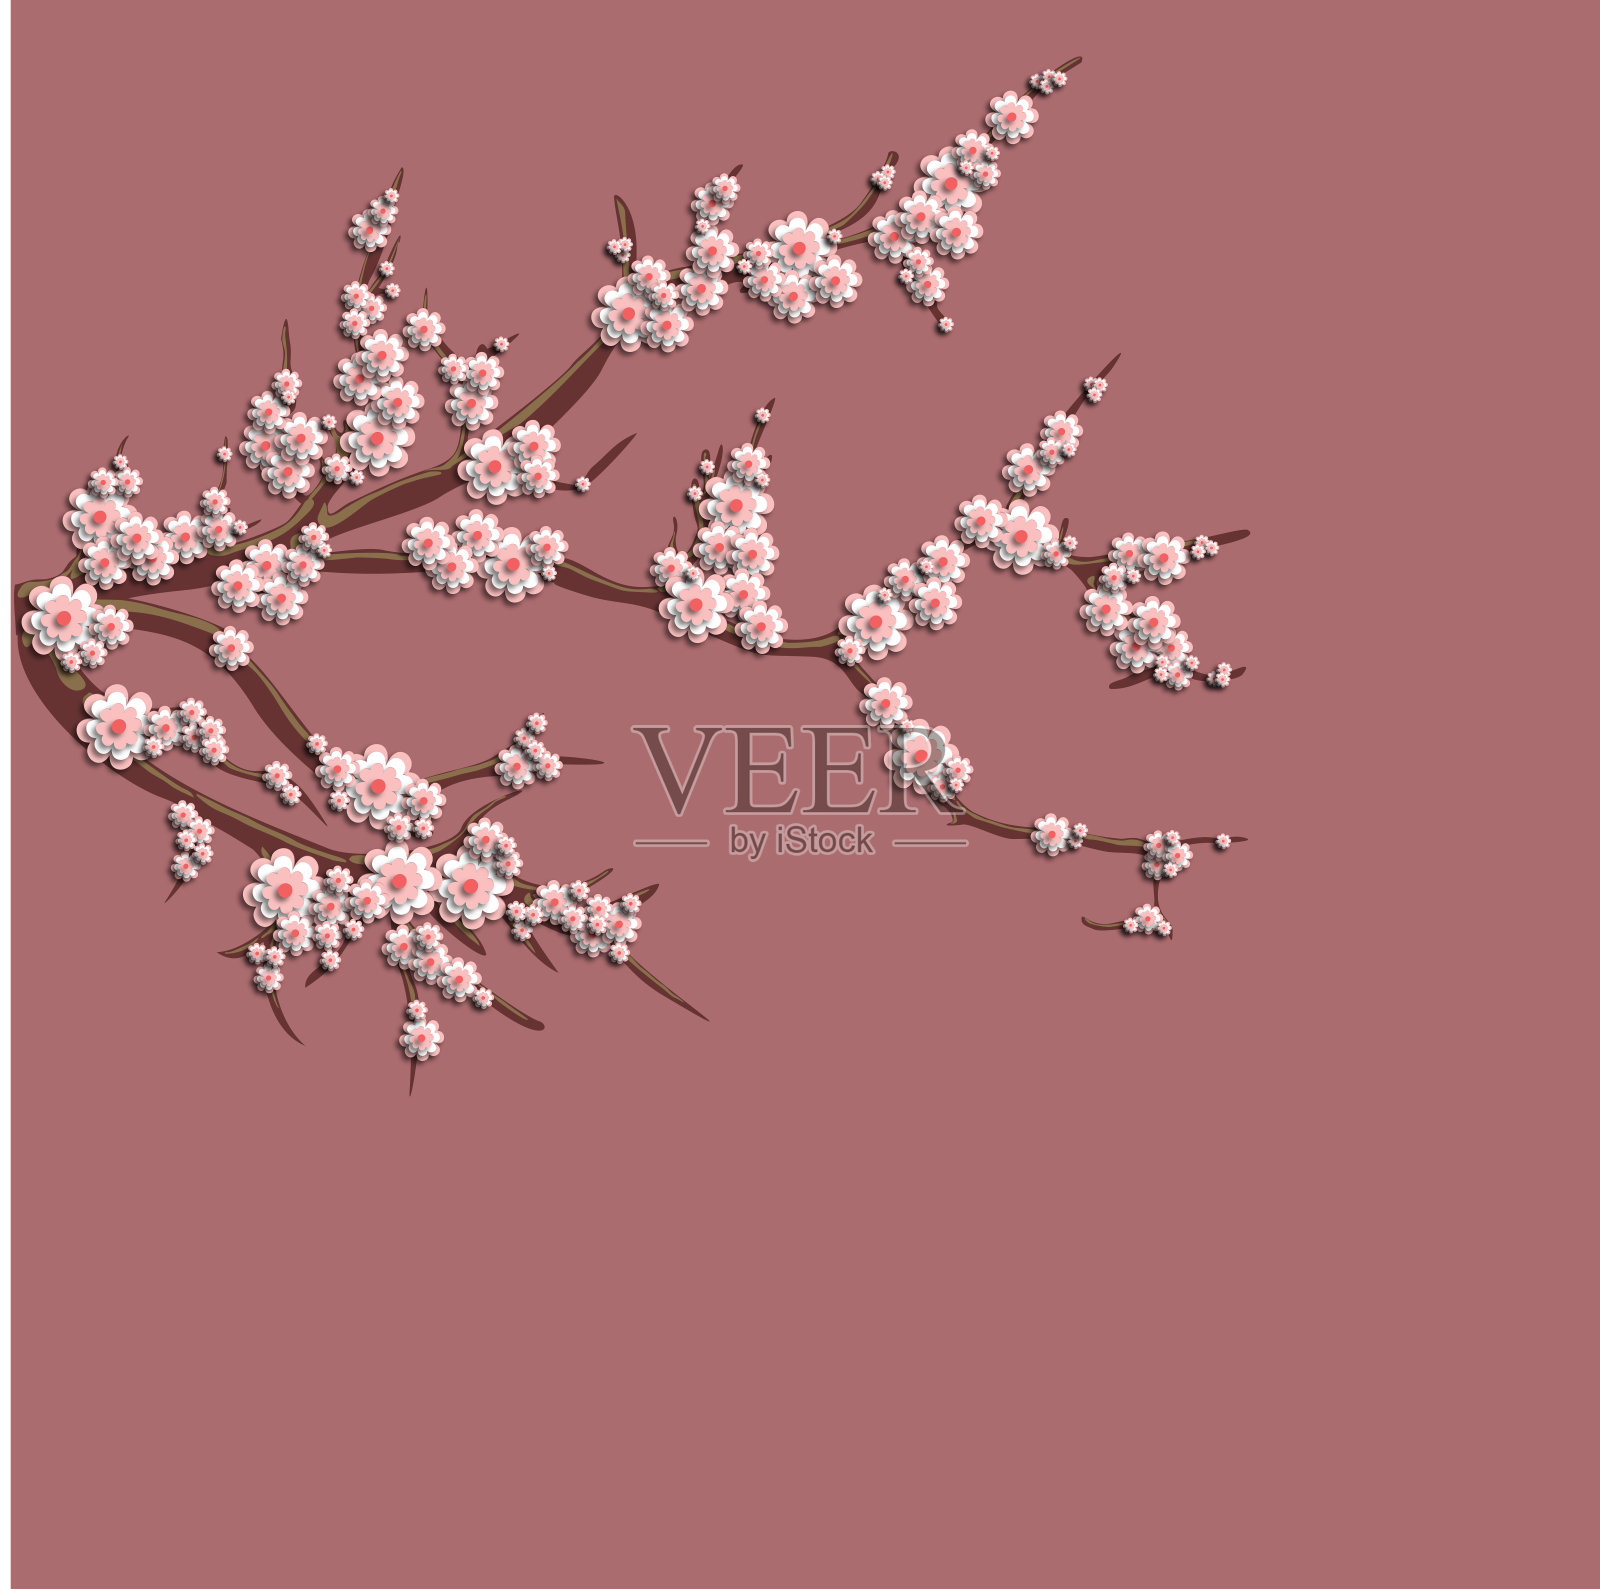 3D粉红色的樱花在树枝上。插画图片素材